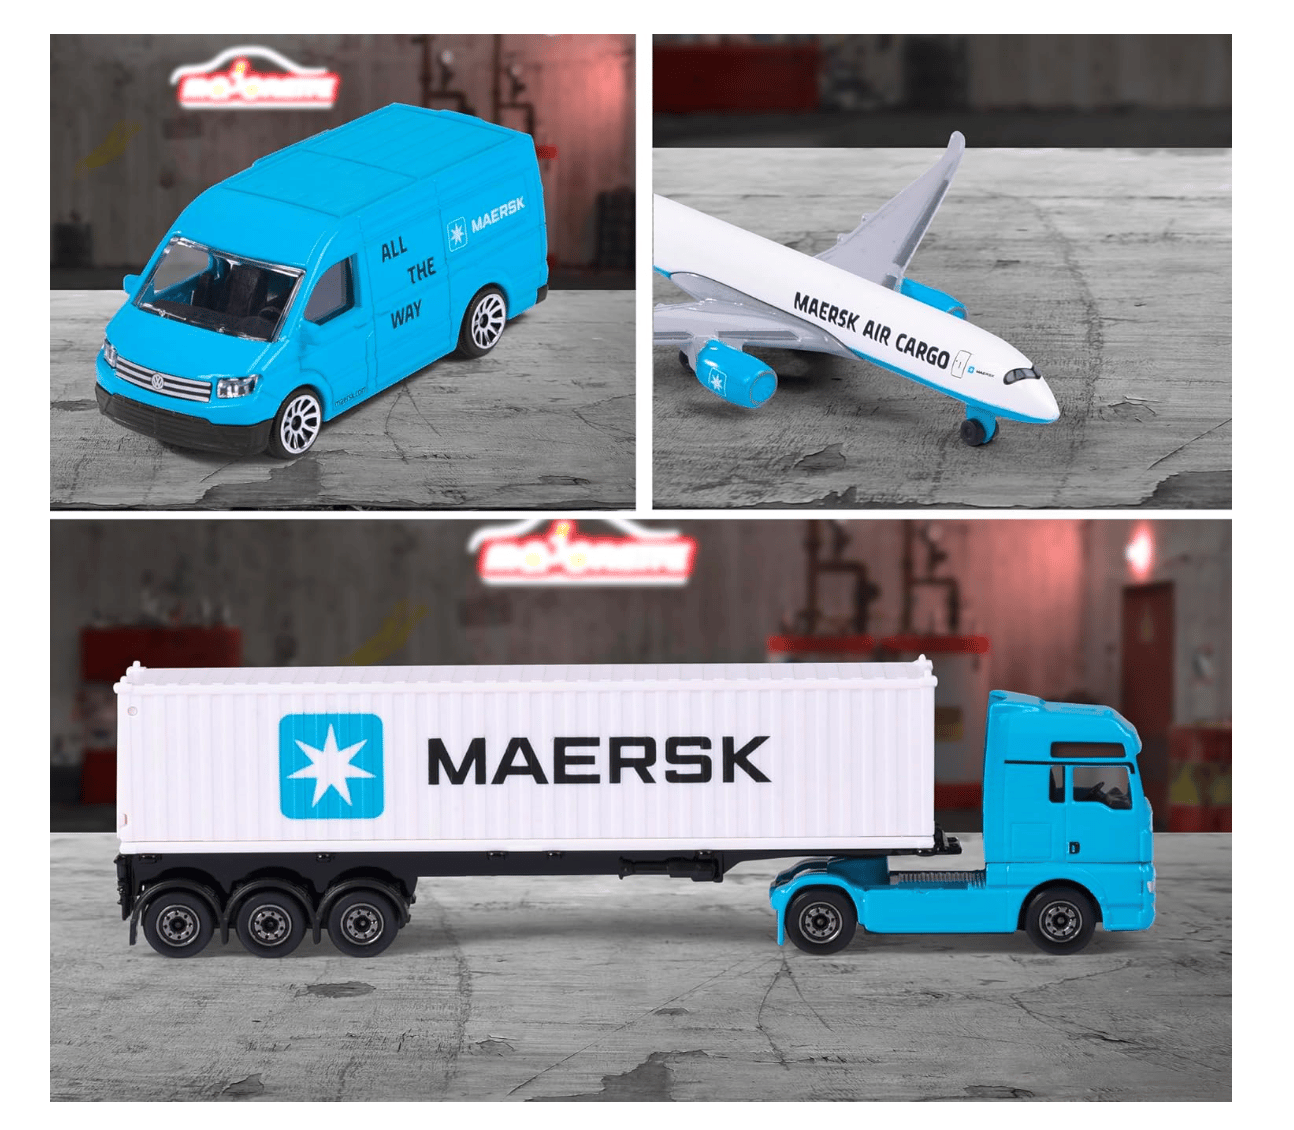 Majorette MAERSK Ulaşım Araçları - Volvo Transporter Container 212057289-1 | Toysall